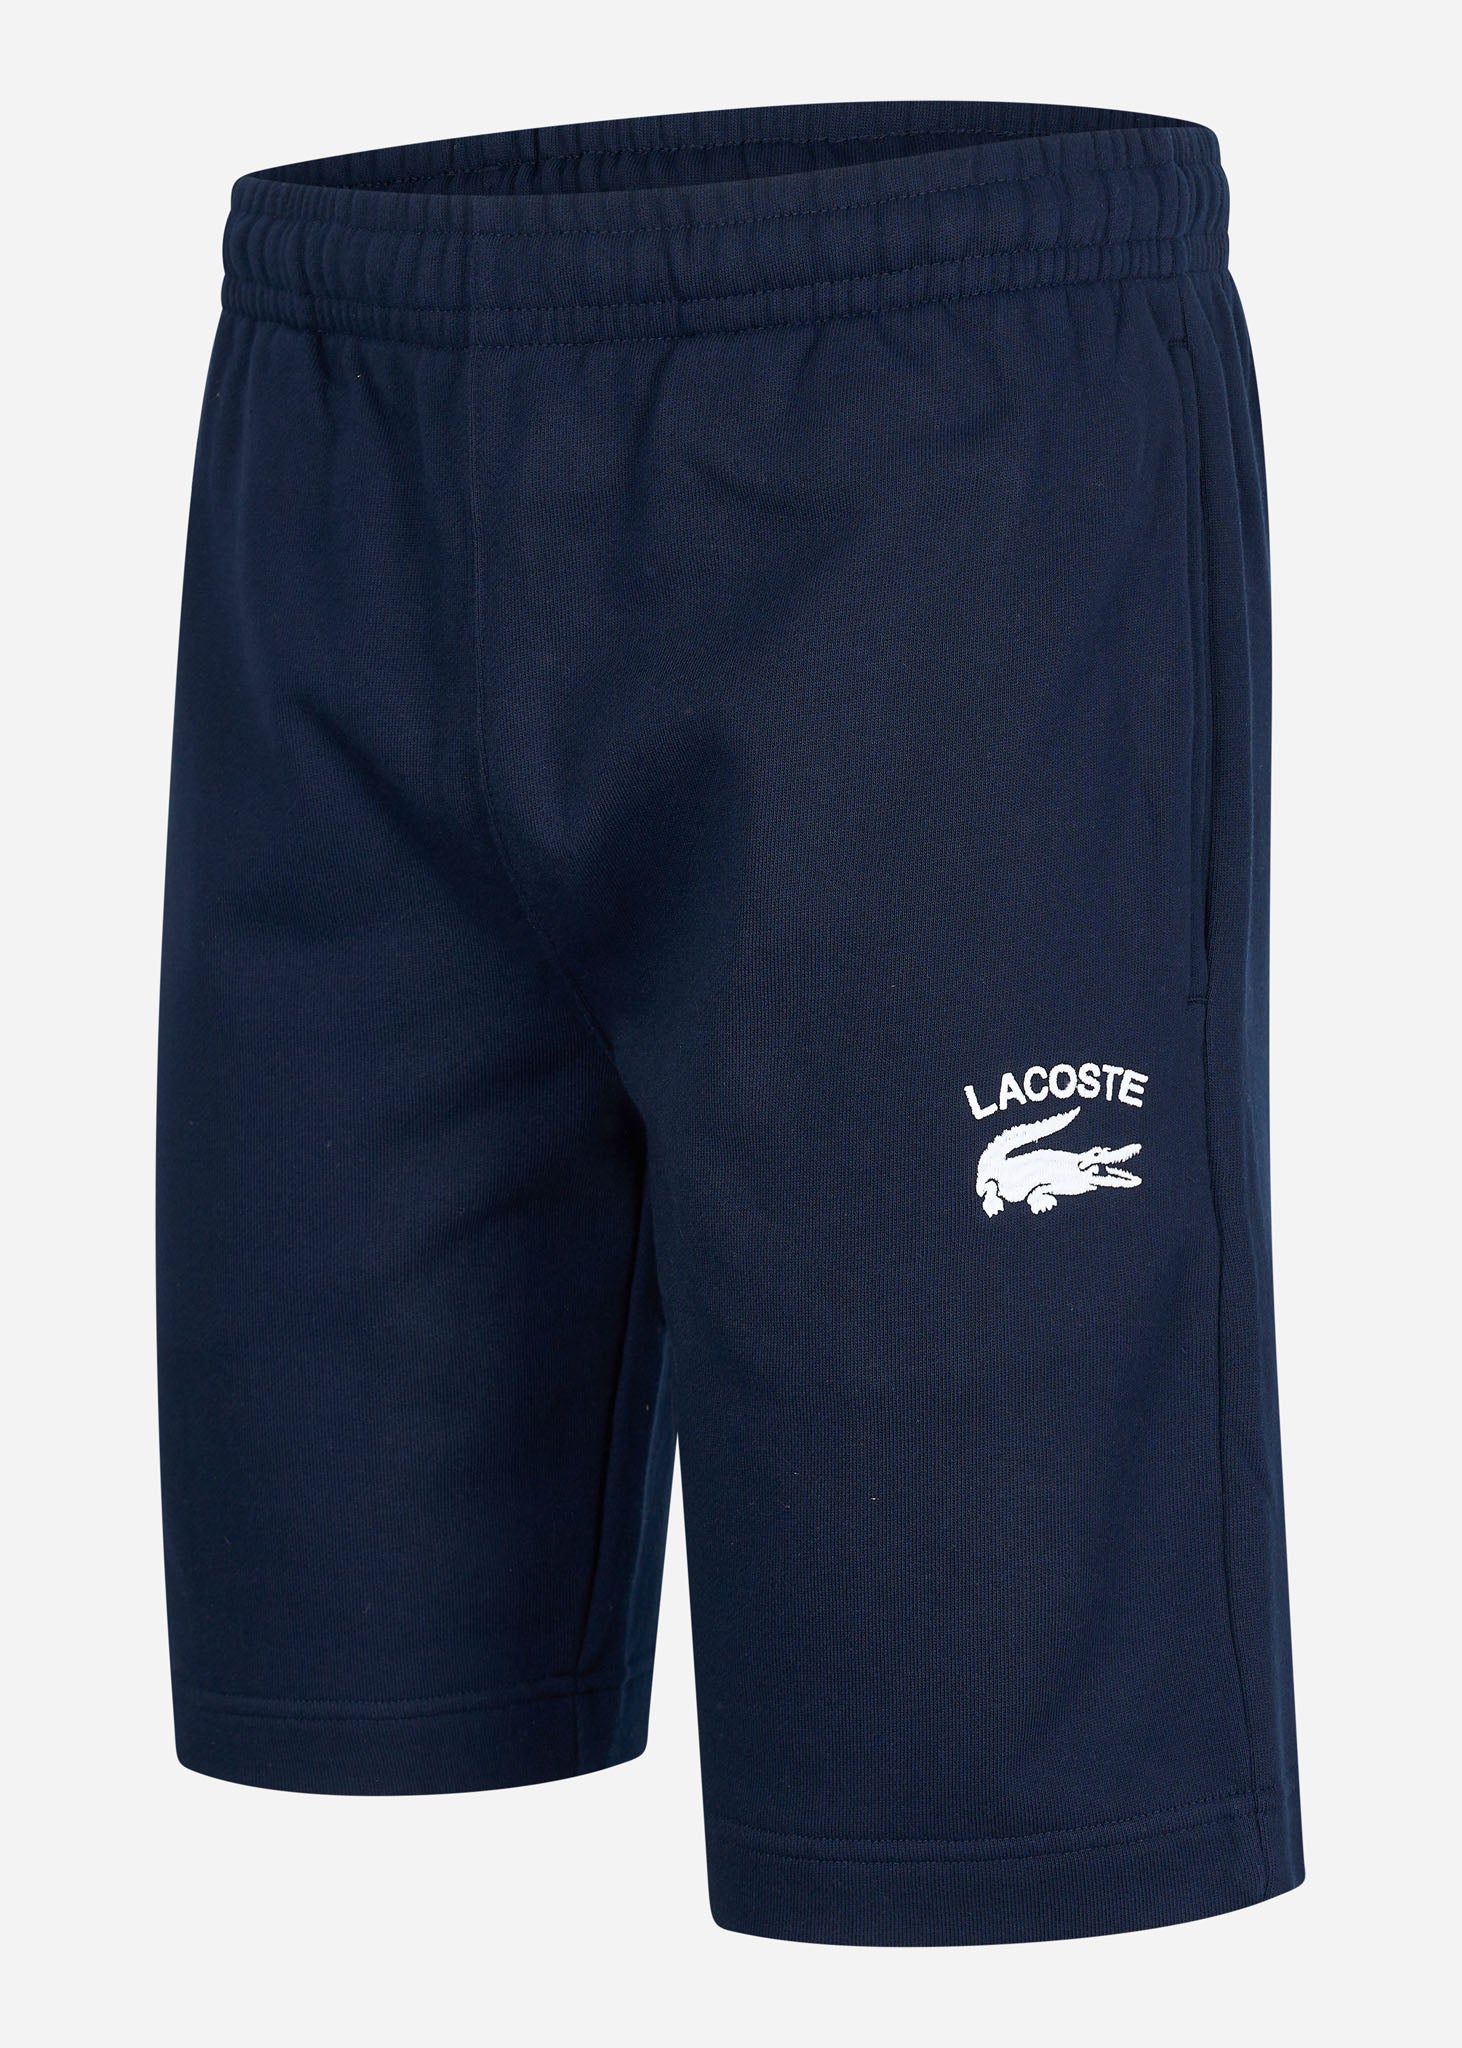 Lacoste Korte Broeken  Branded shorts - navy blue 